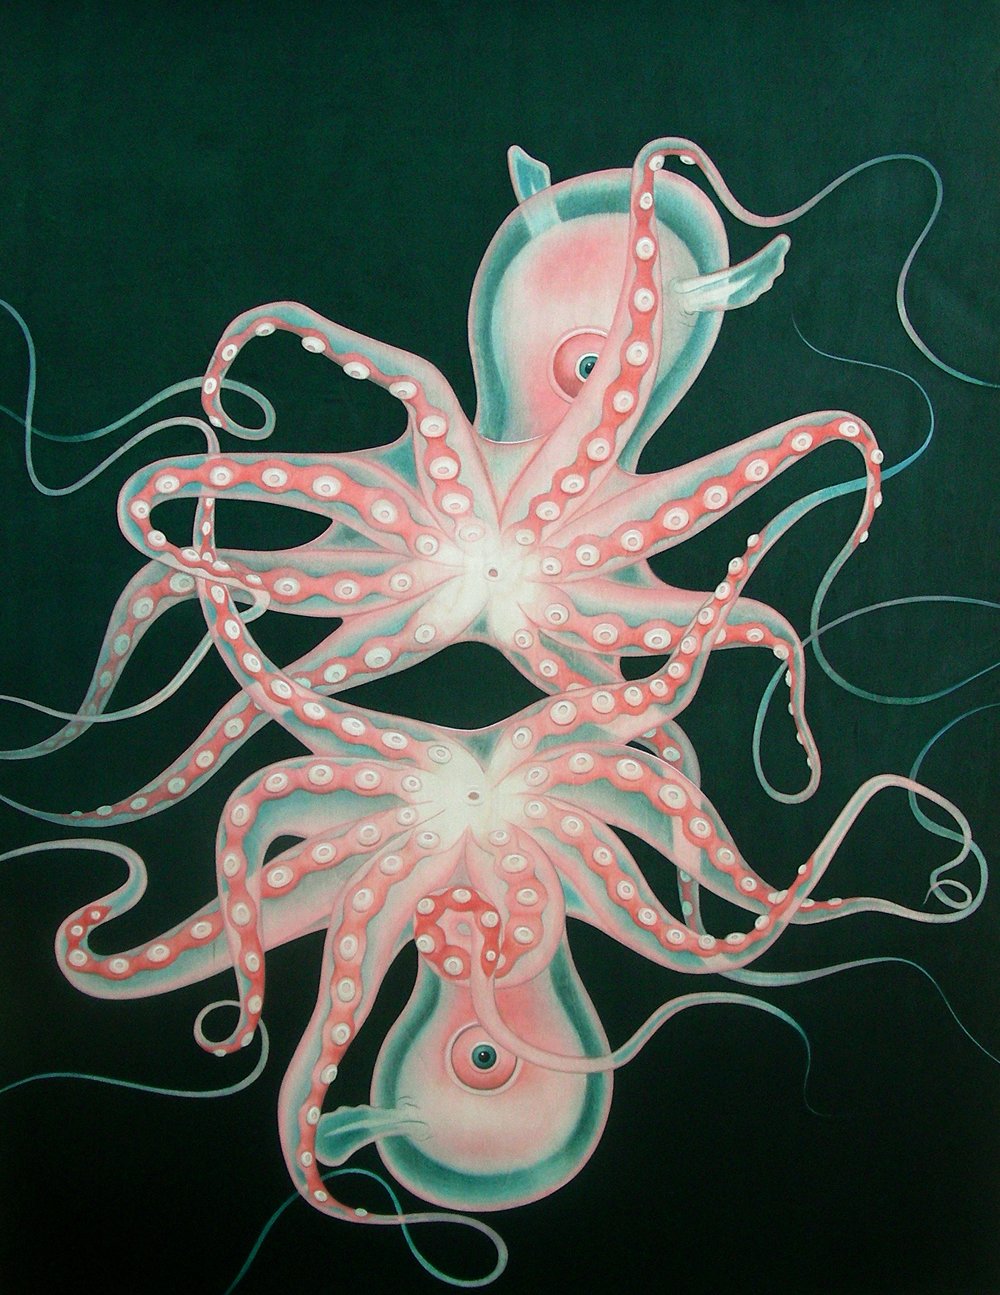 Dumbo Octopus, 20 x 27 inches, acrylic on maple panel, 2008